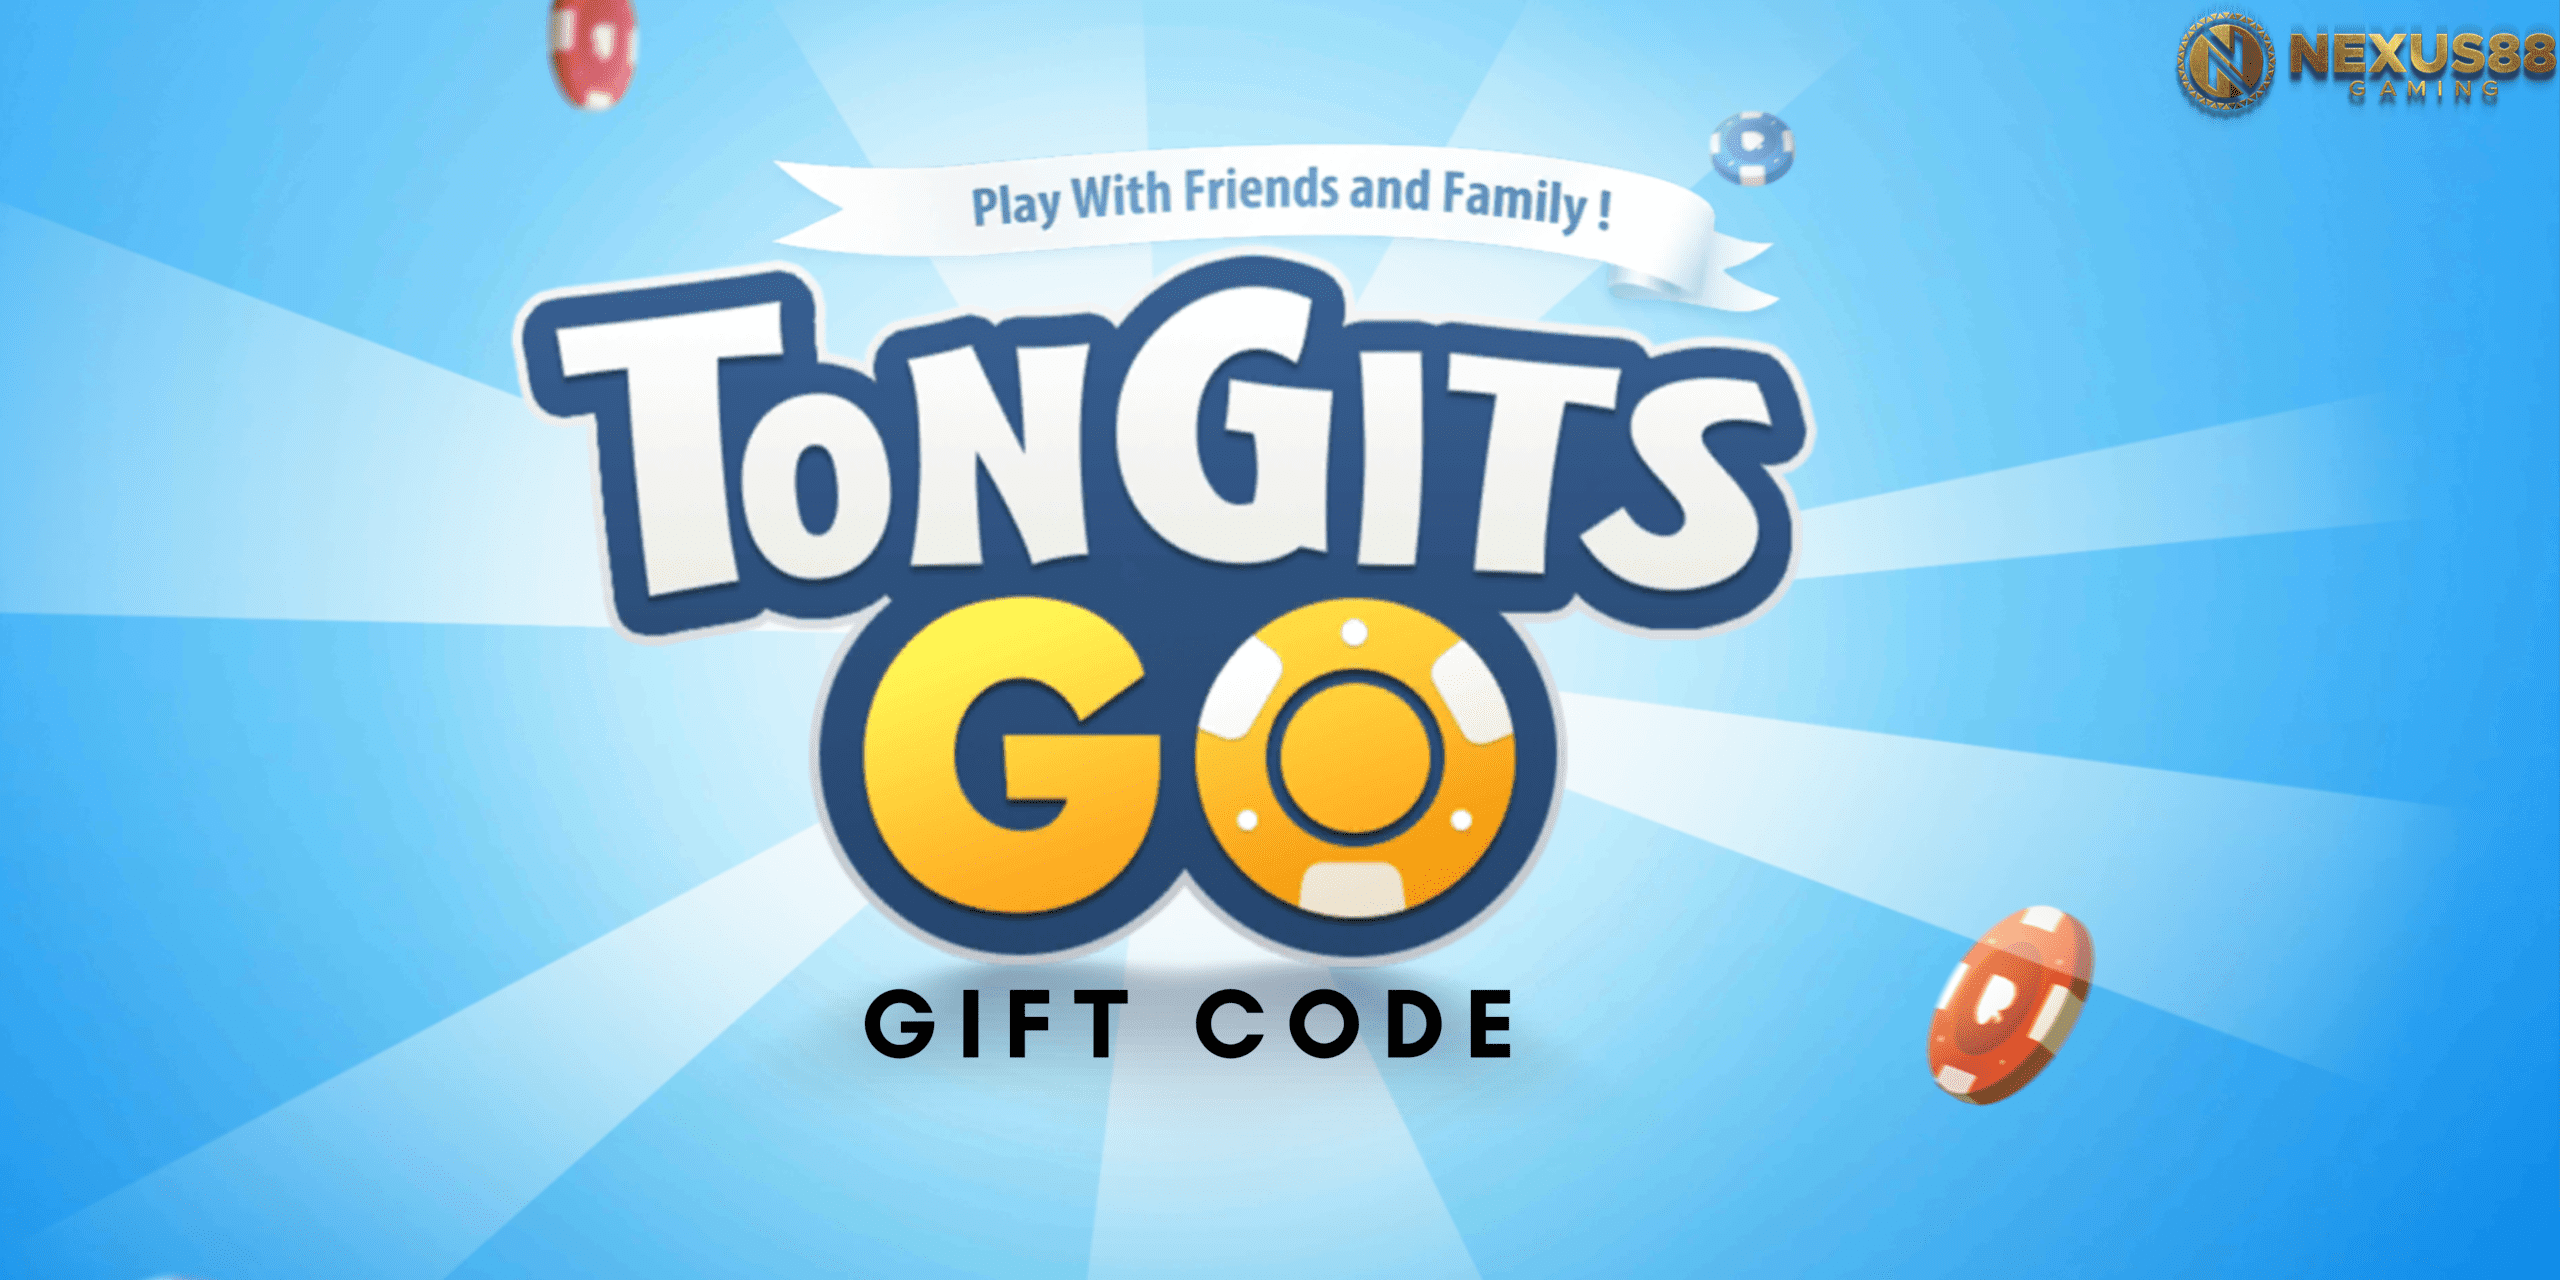 Gift Code Tongits Go Extravaganza Unleash the Fun!